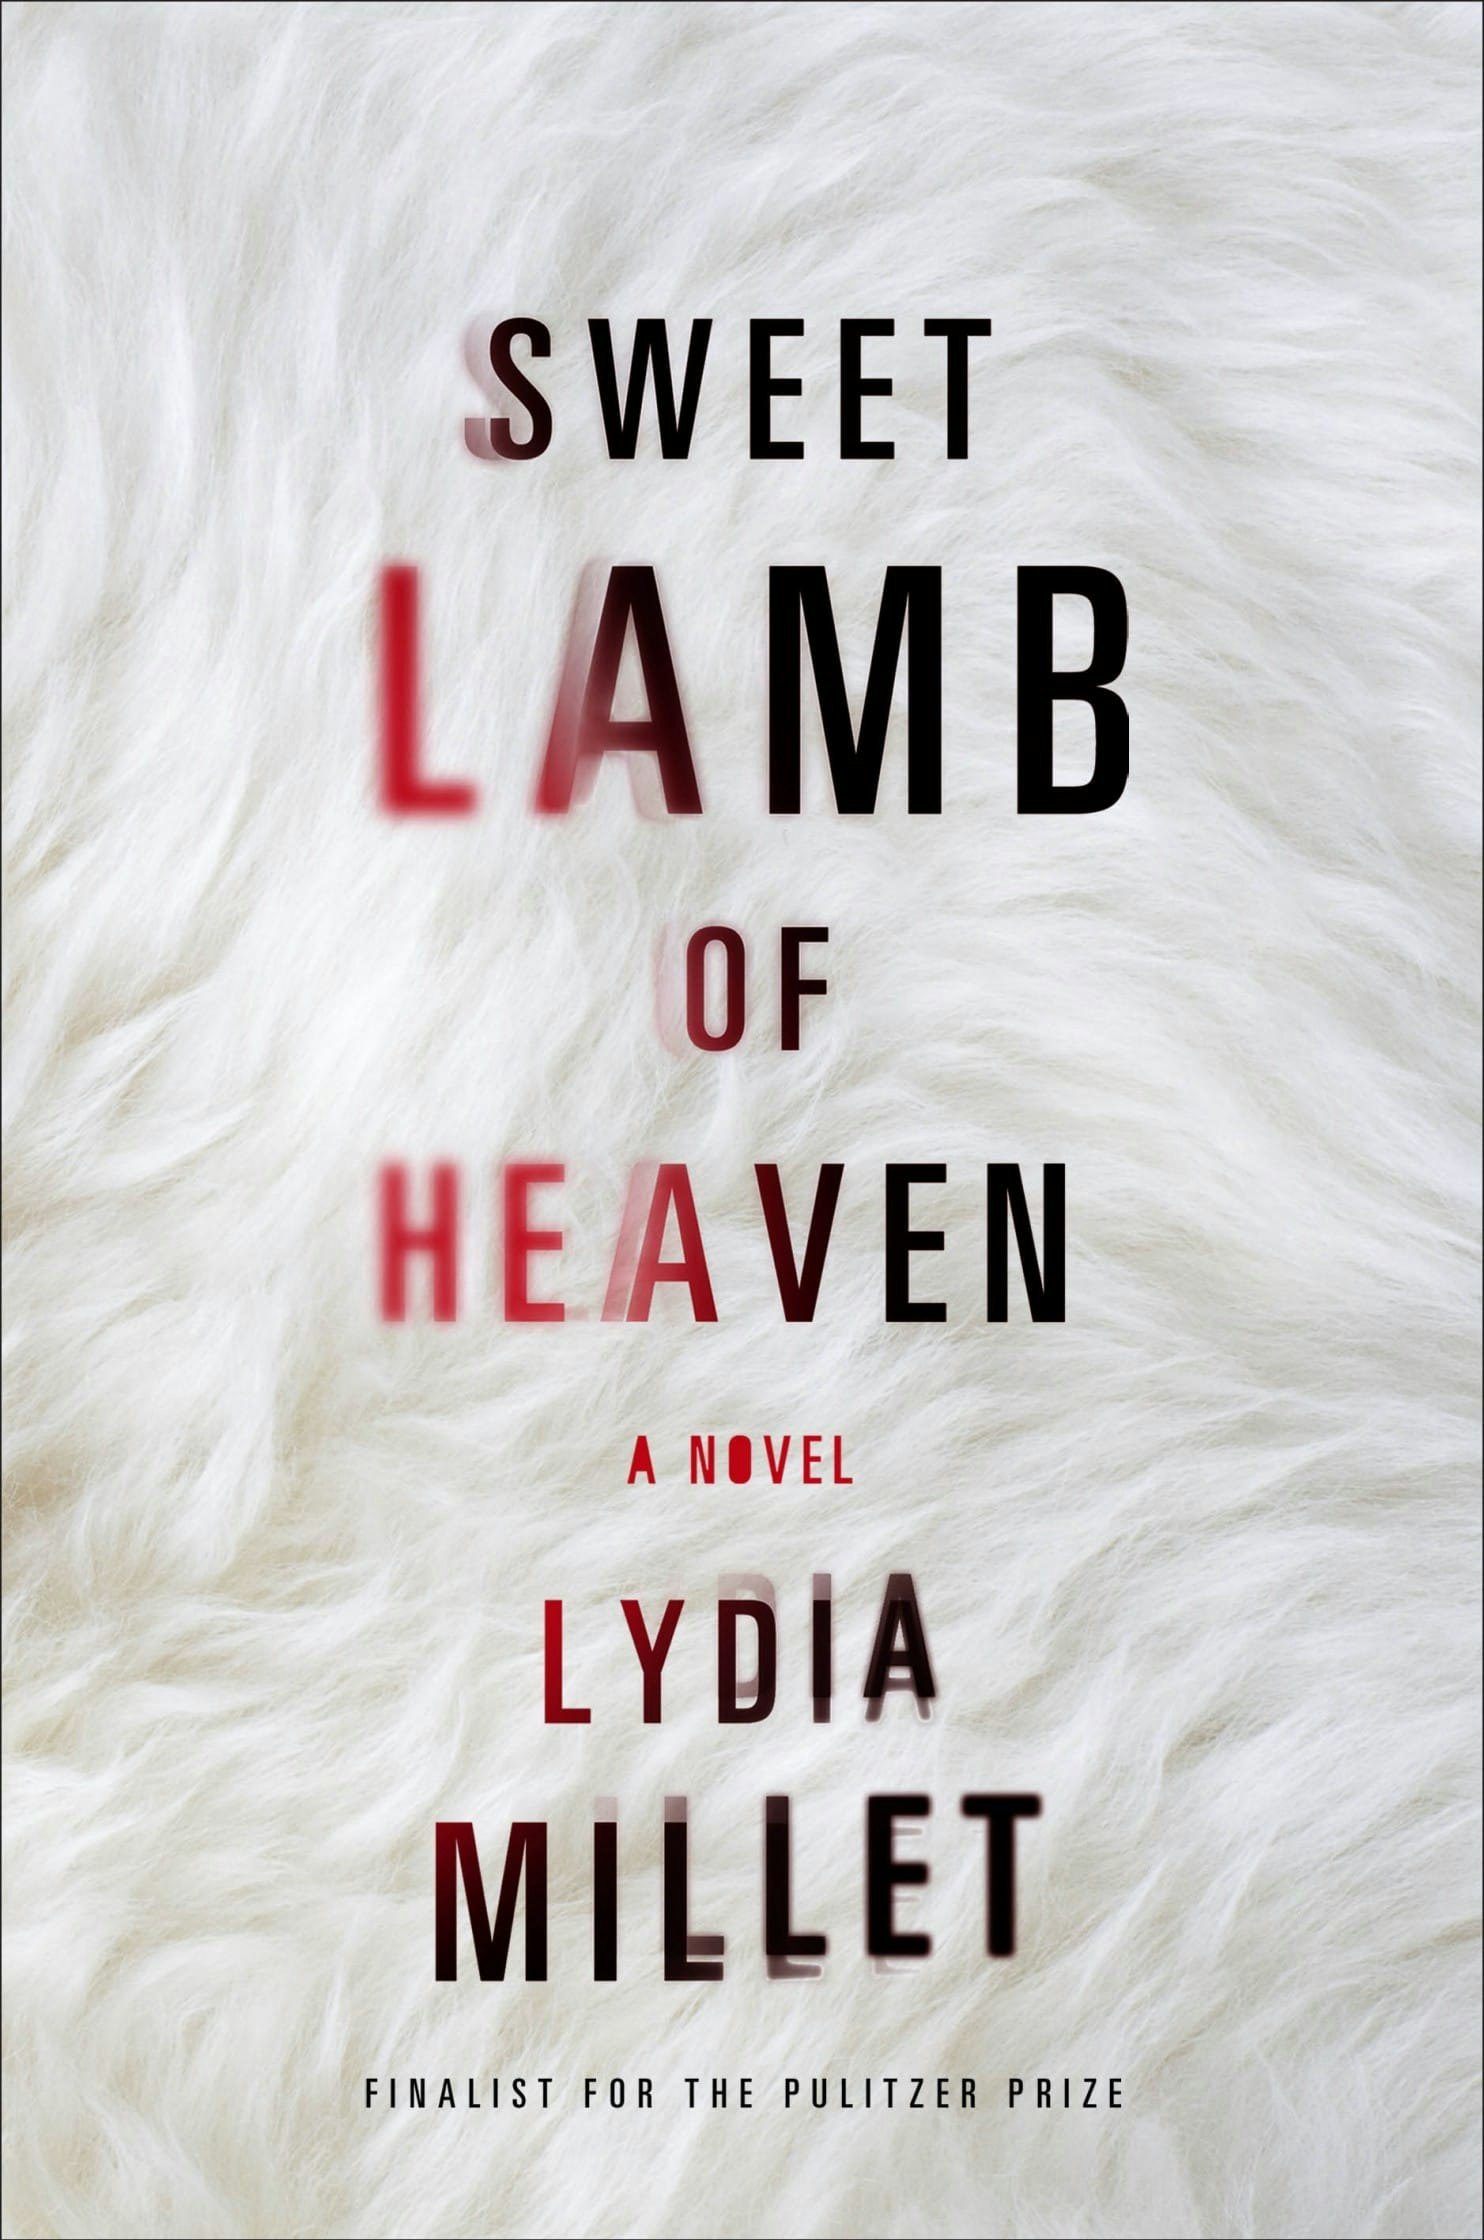 sweet lamb of heaven by lydia millet